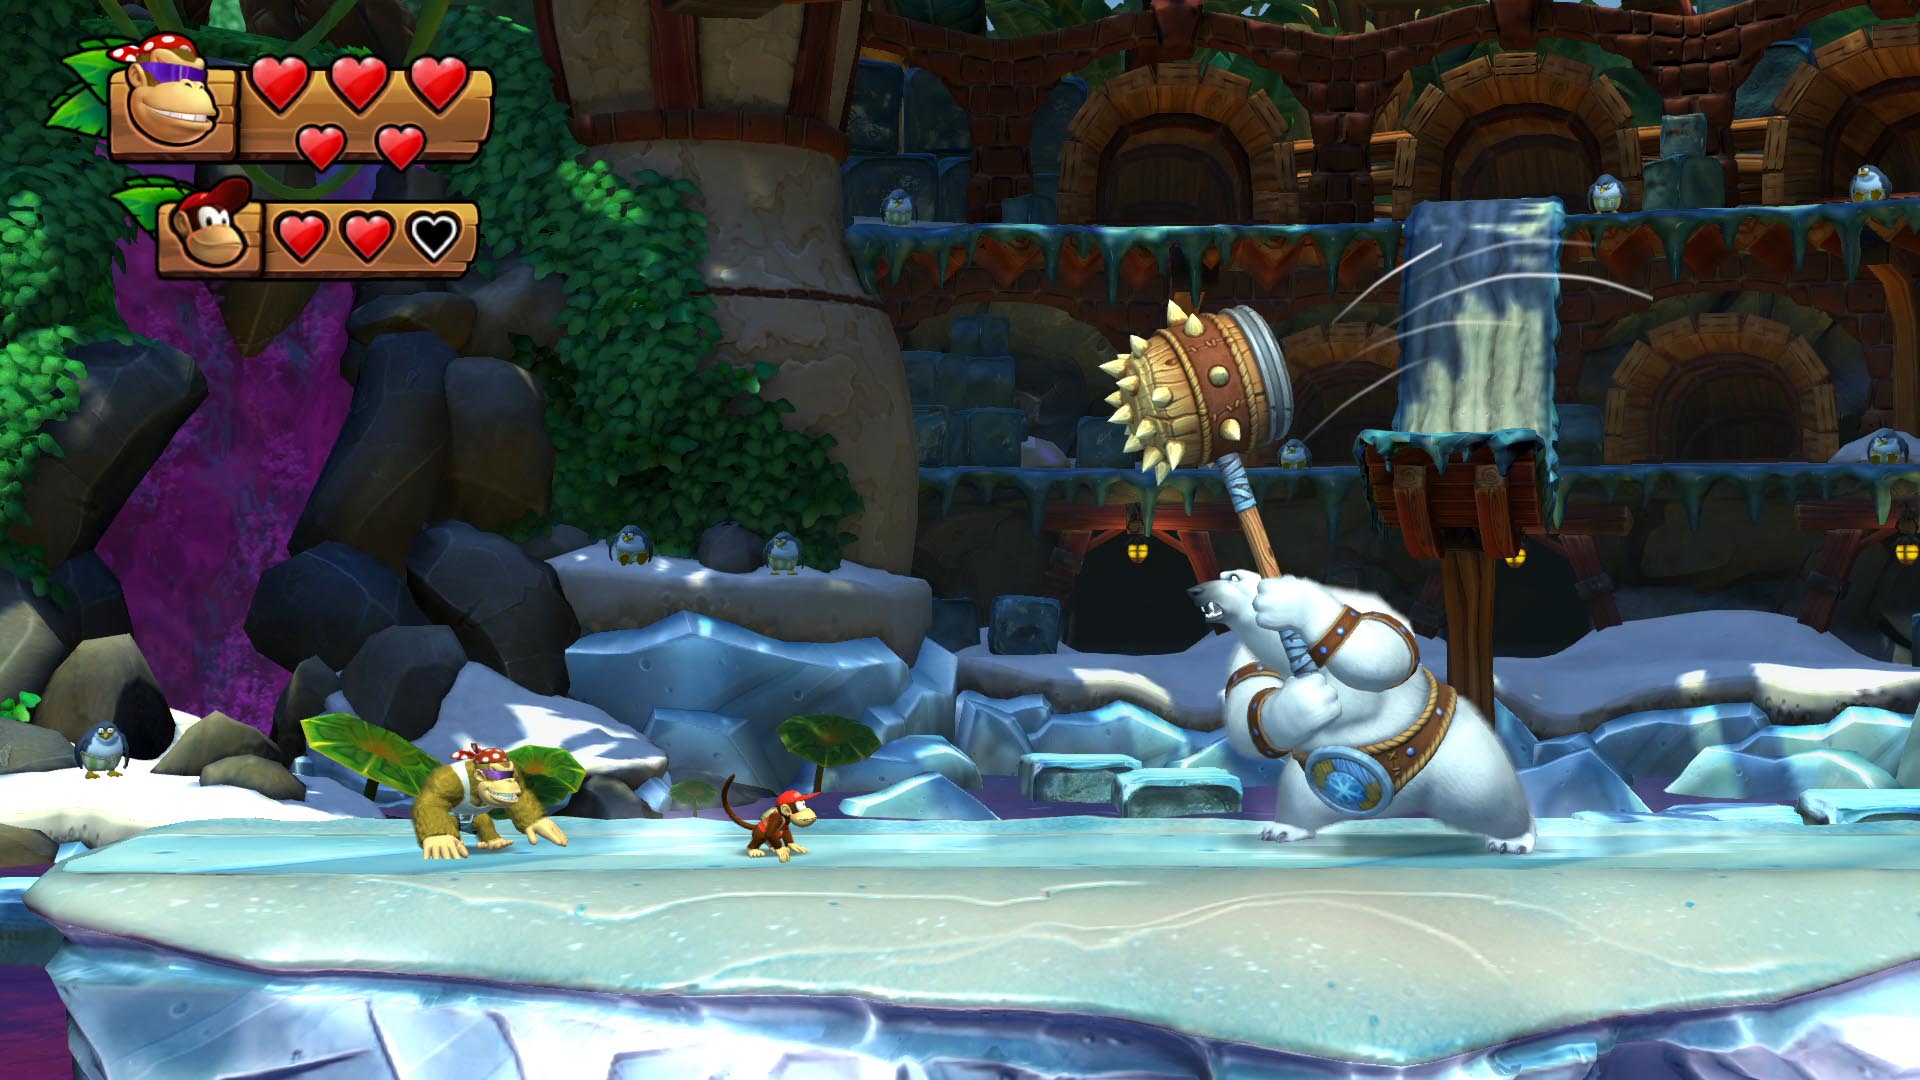 Donkey Kong Country Tropical Freeze Nintendo Switch - Compra jogos online  na